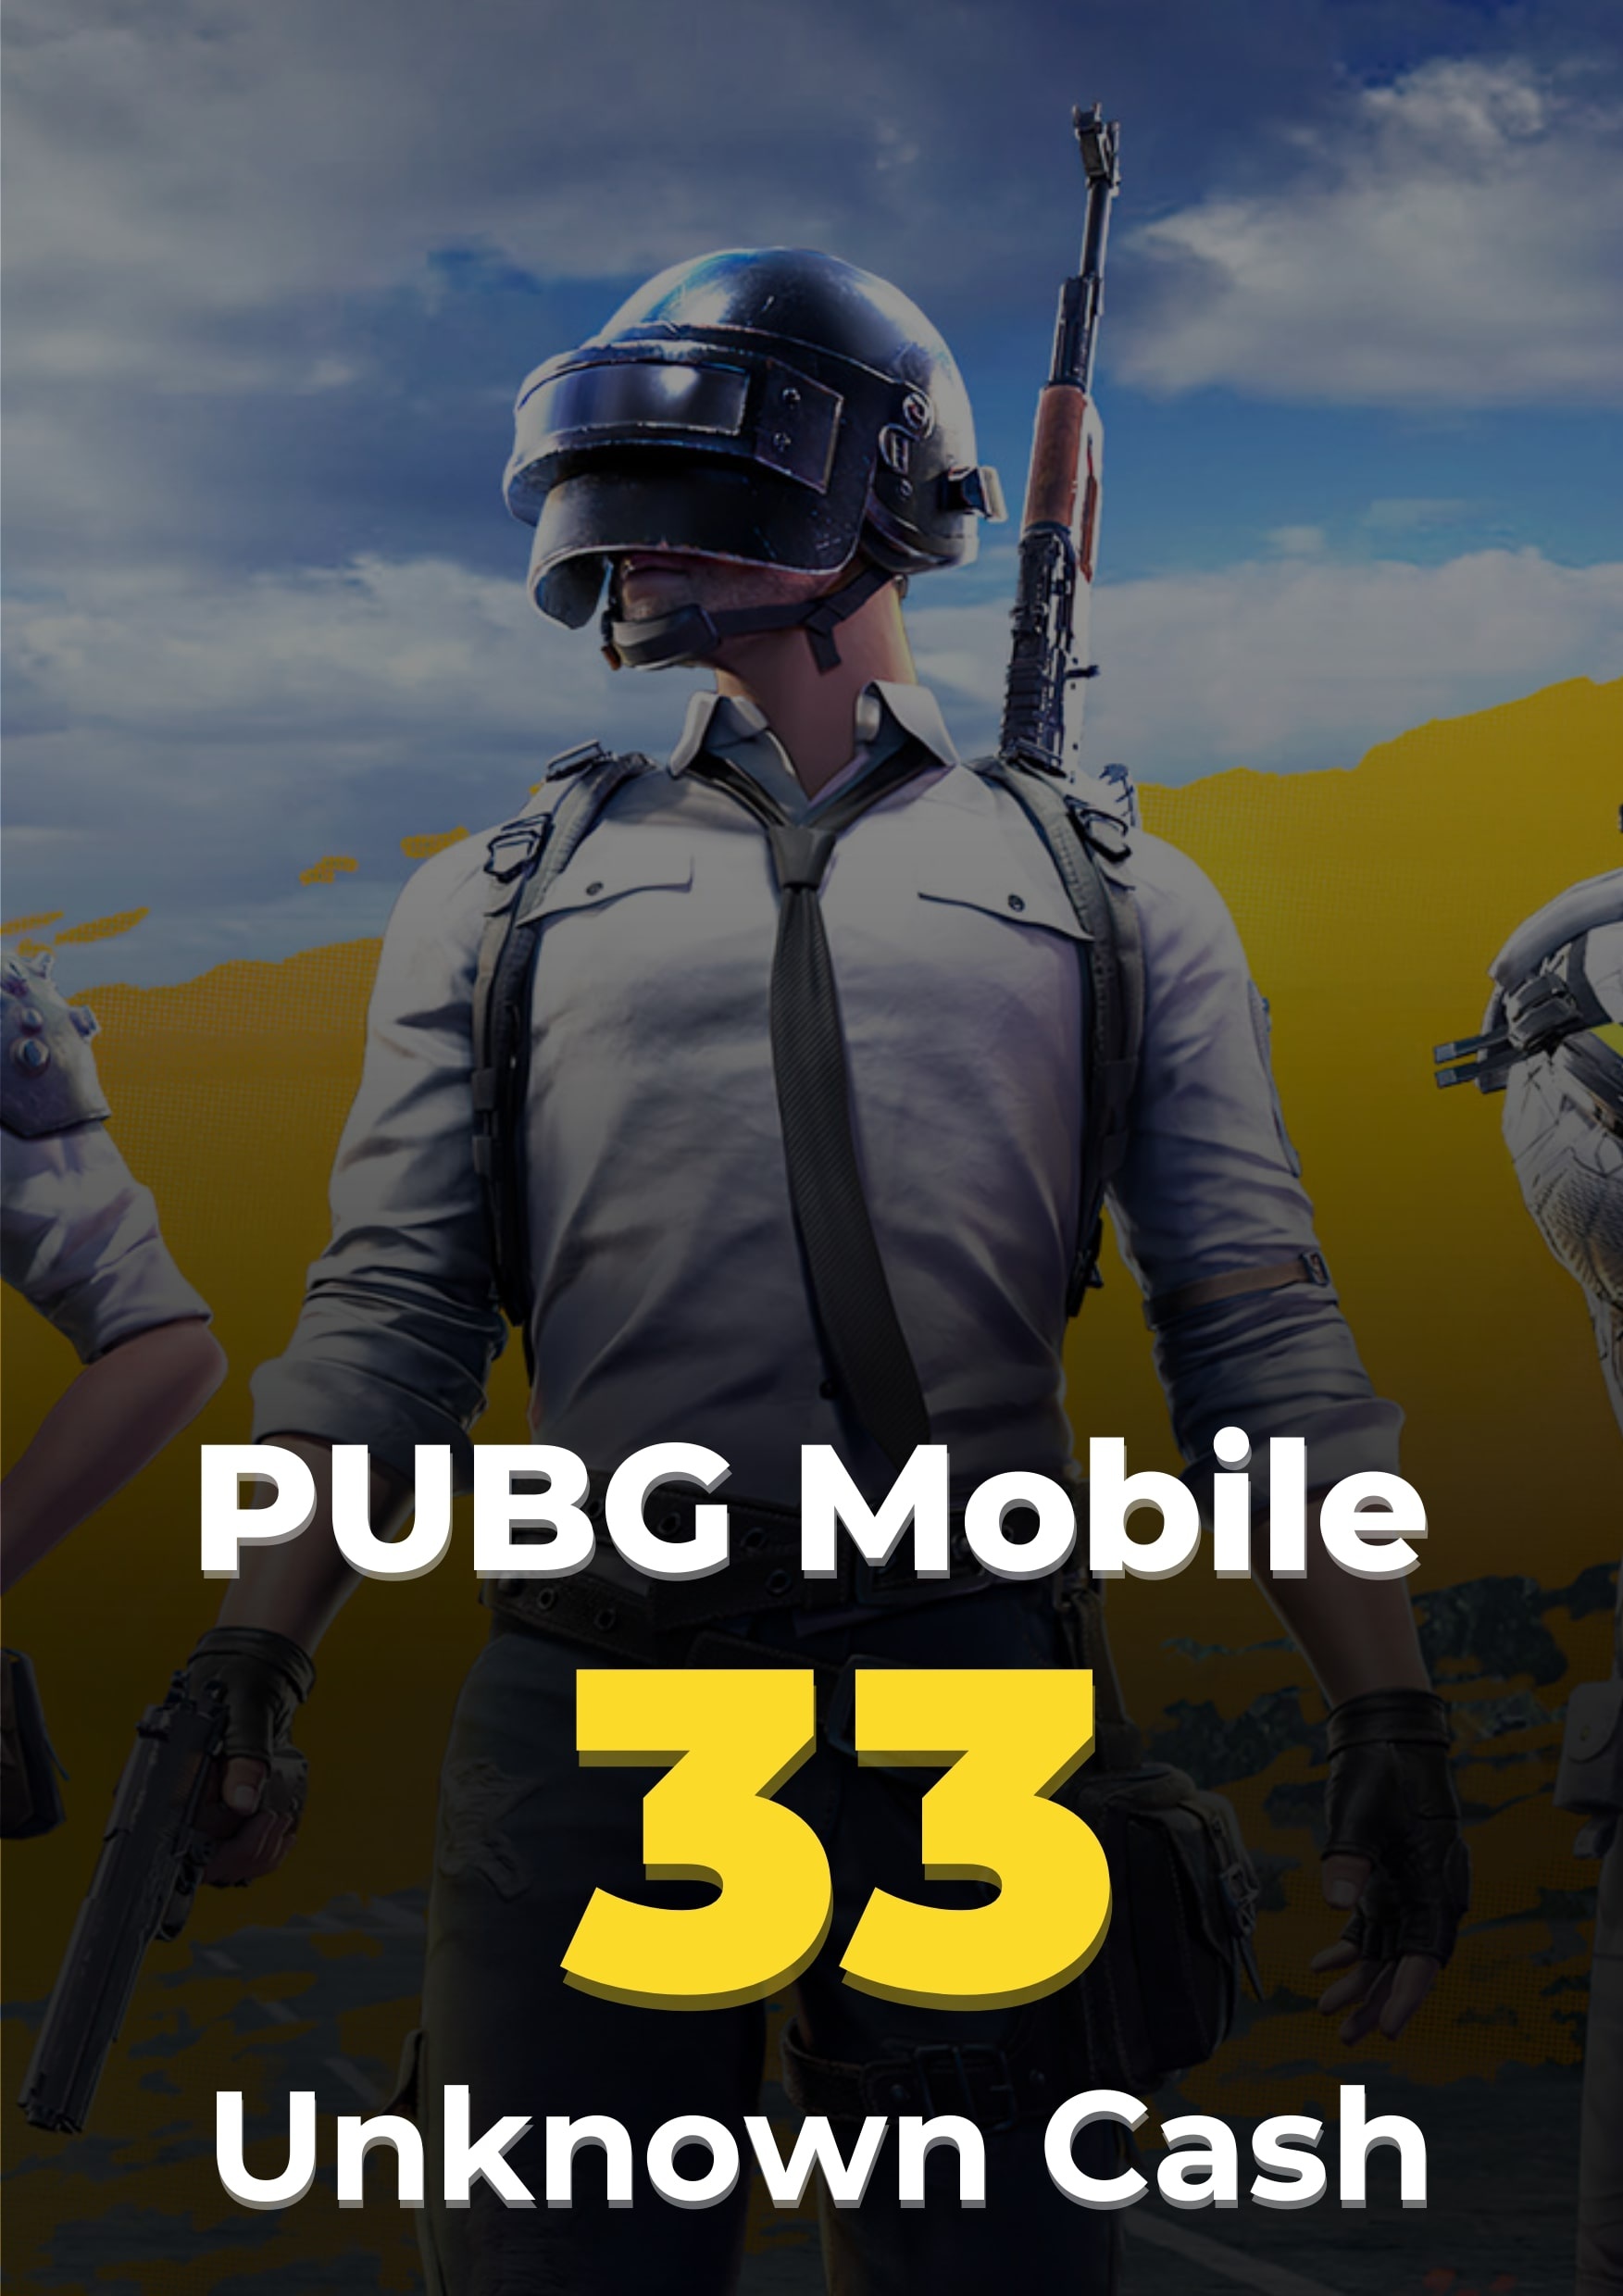 PUBG Mobile 33 UC